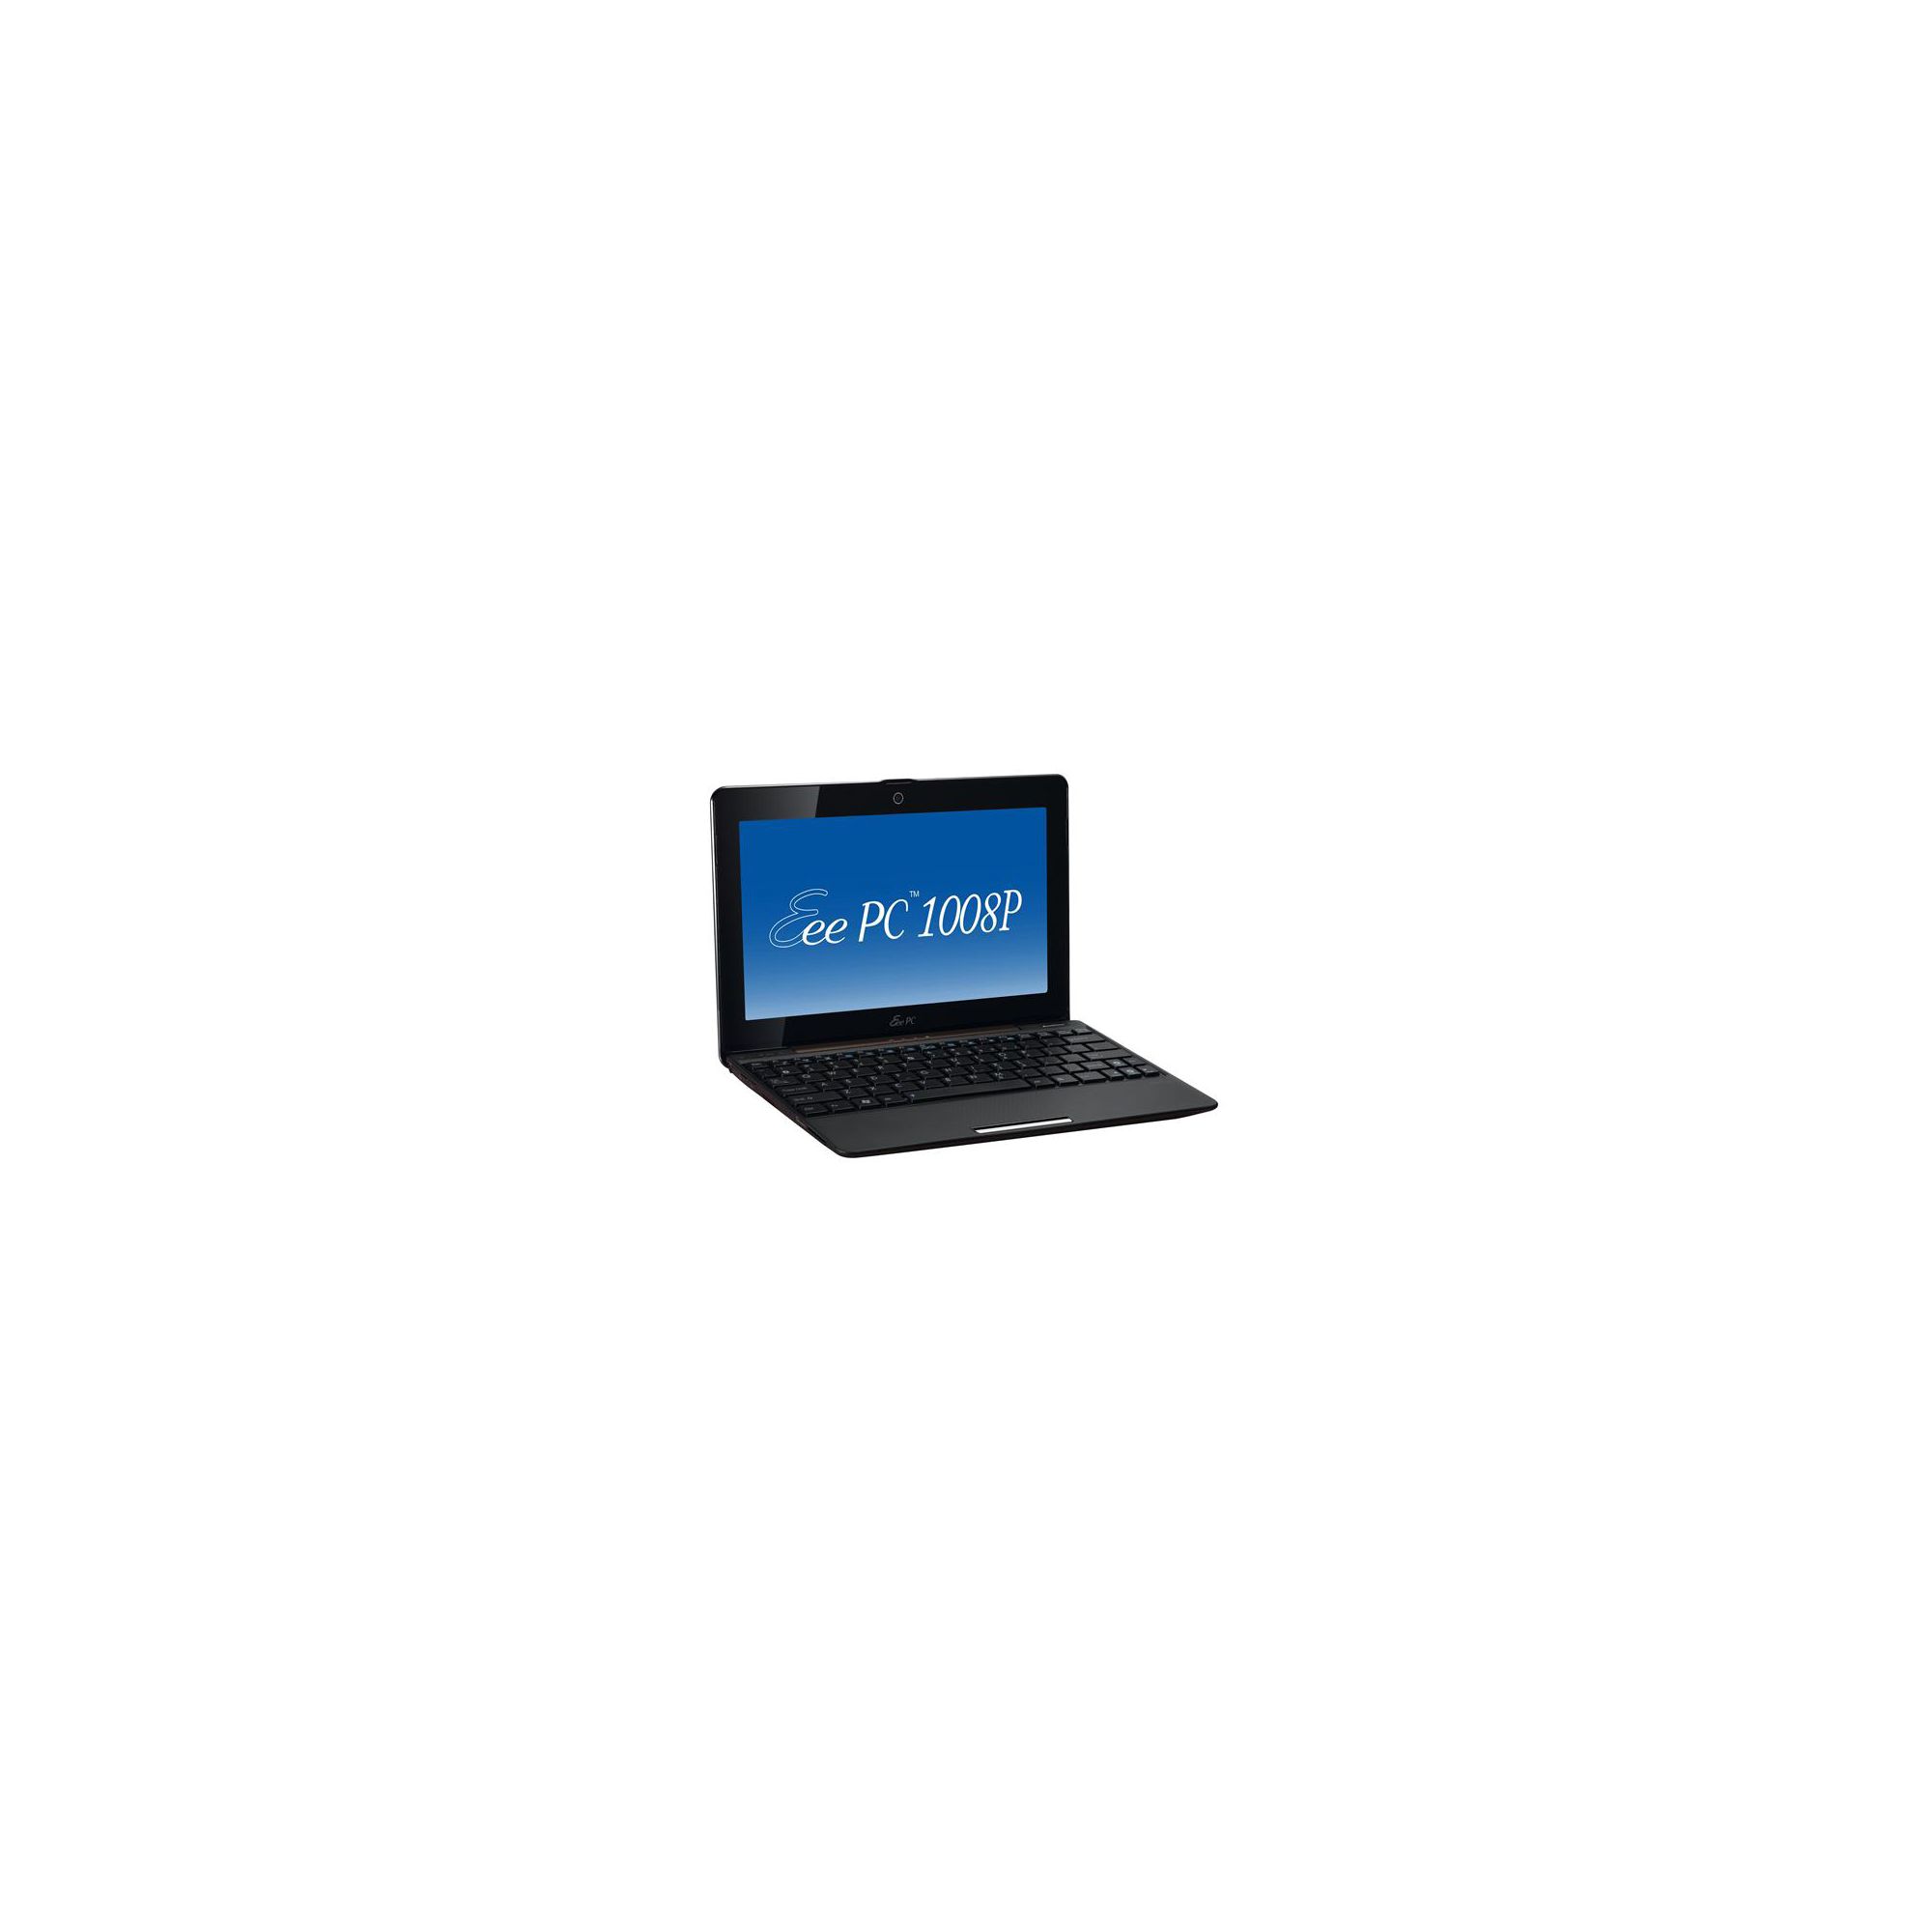 Asus Eee PC 1008P-BRN137S Netbook (1GB, 250GB, 10.1'' Display) Brown at Tescos Direct